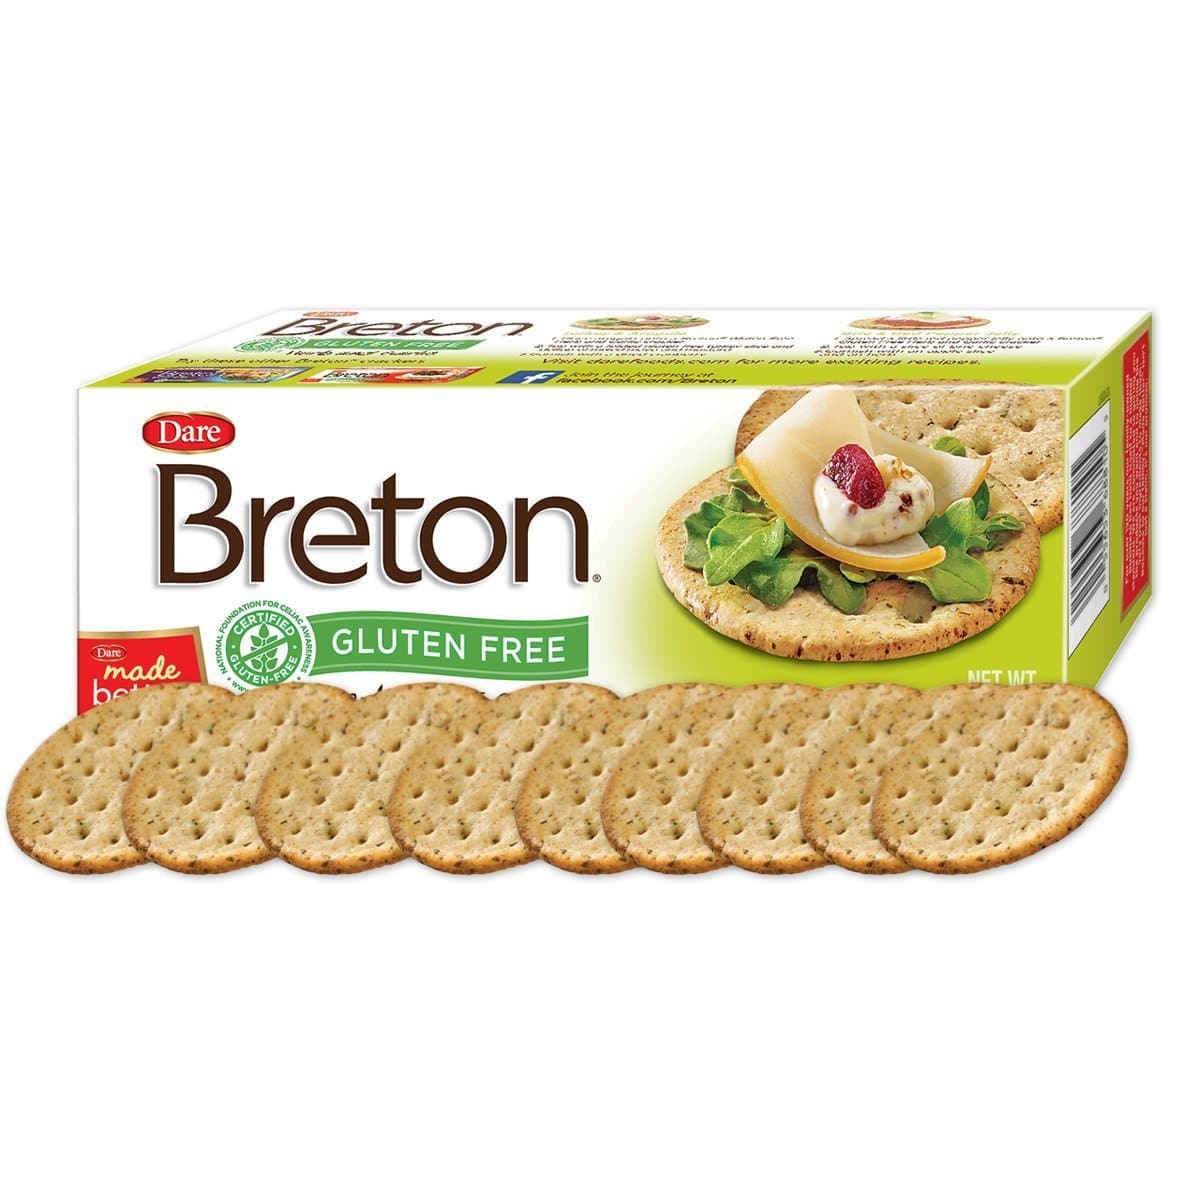 3. Dare Breton Gluten Free Crackers